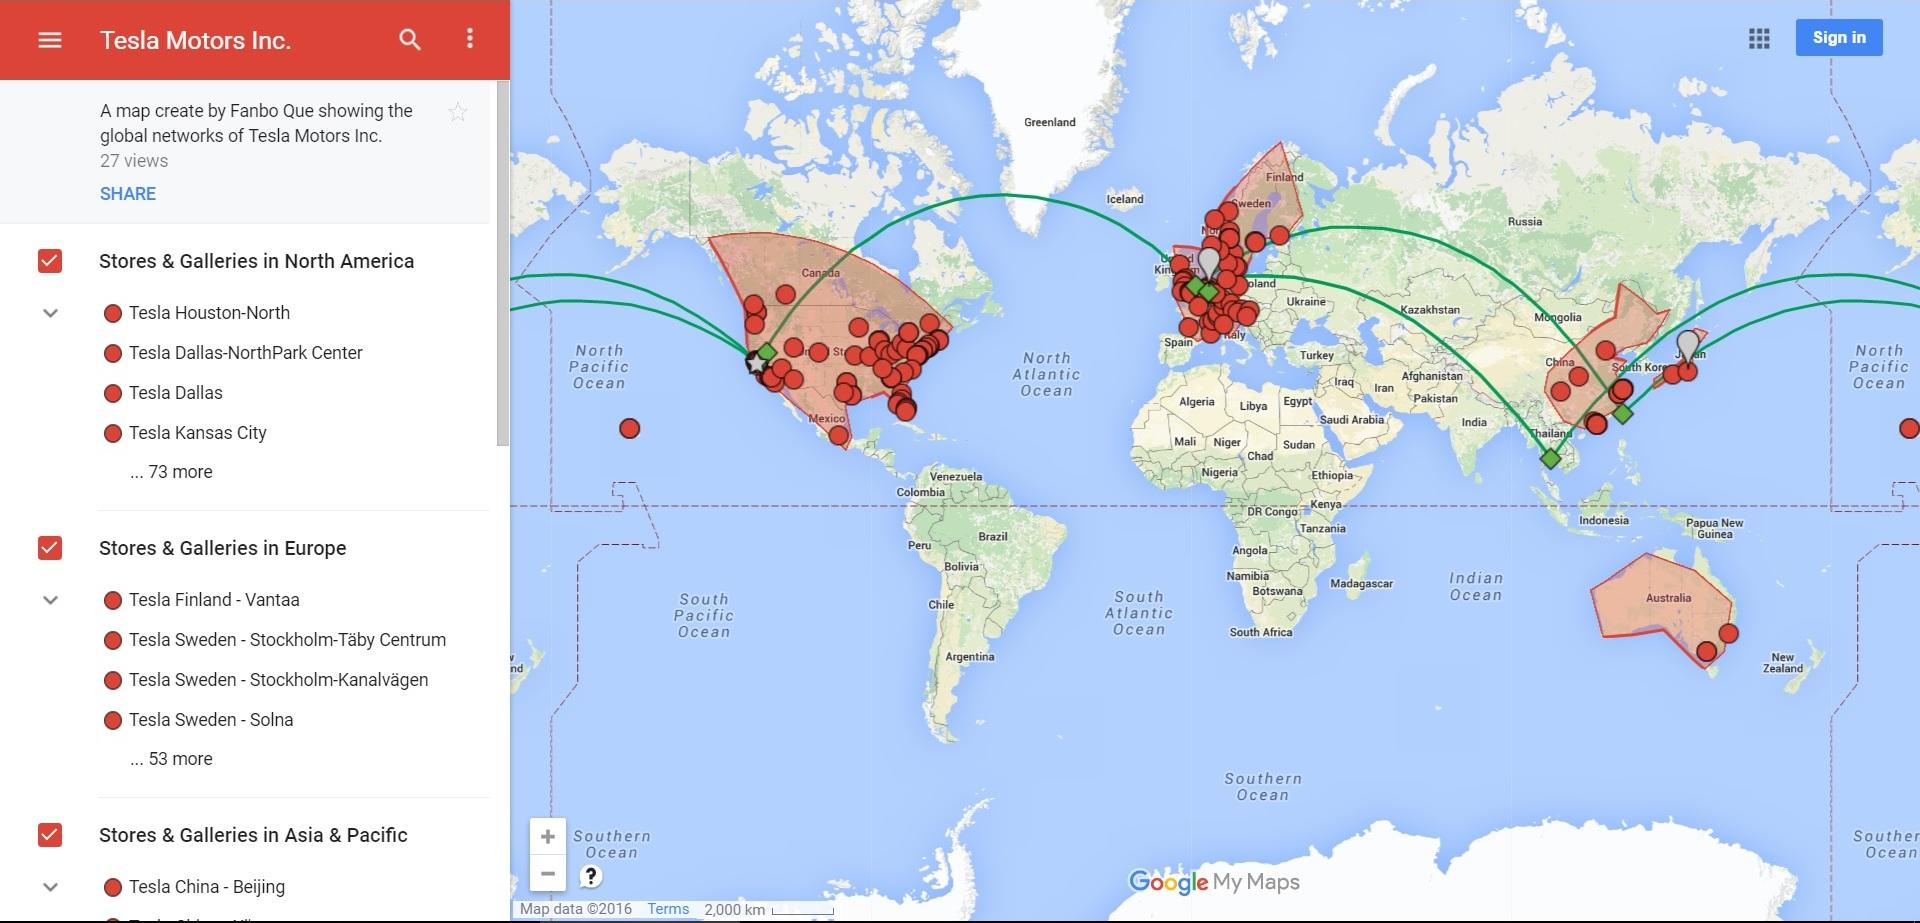 Map of Tesla Motors’ global network.